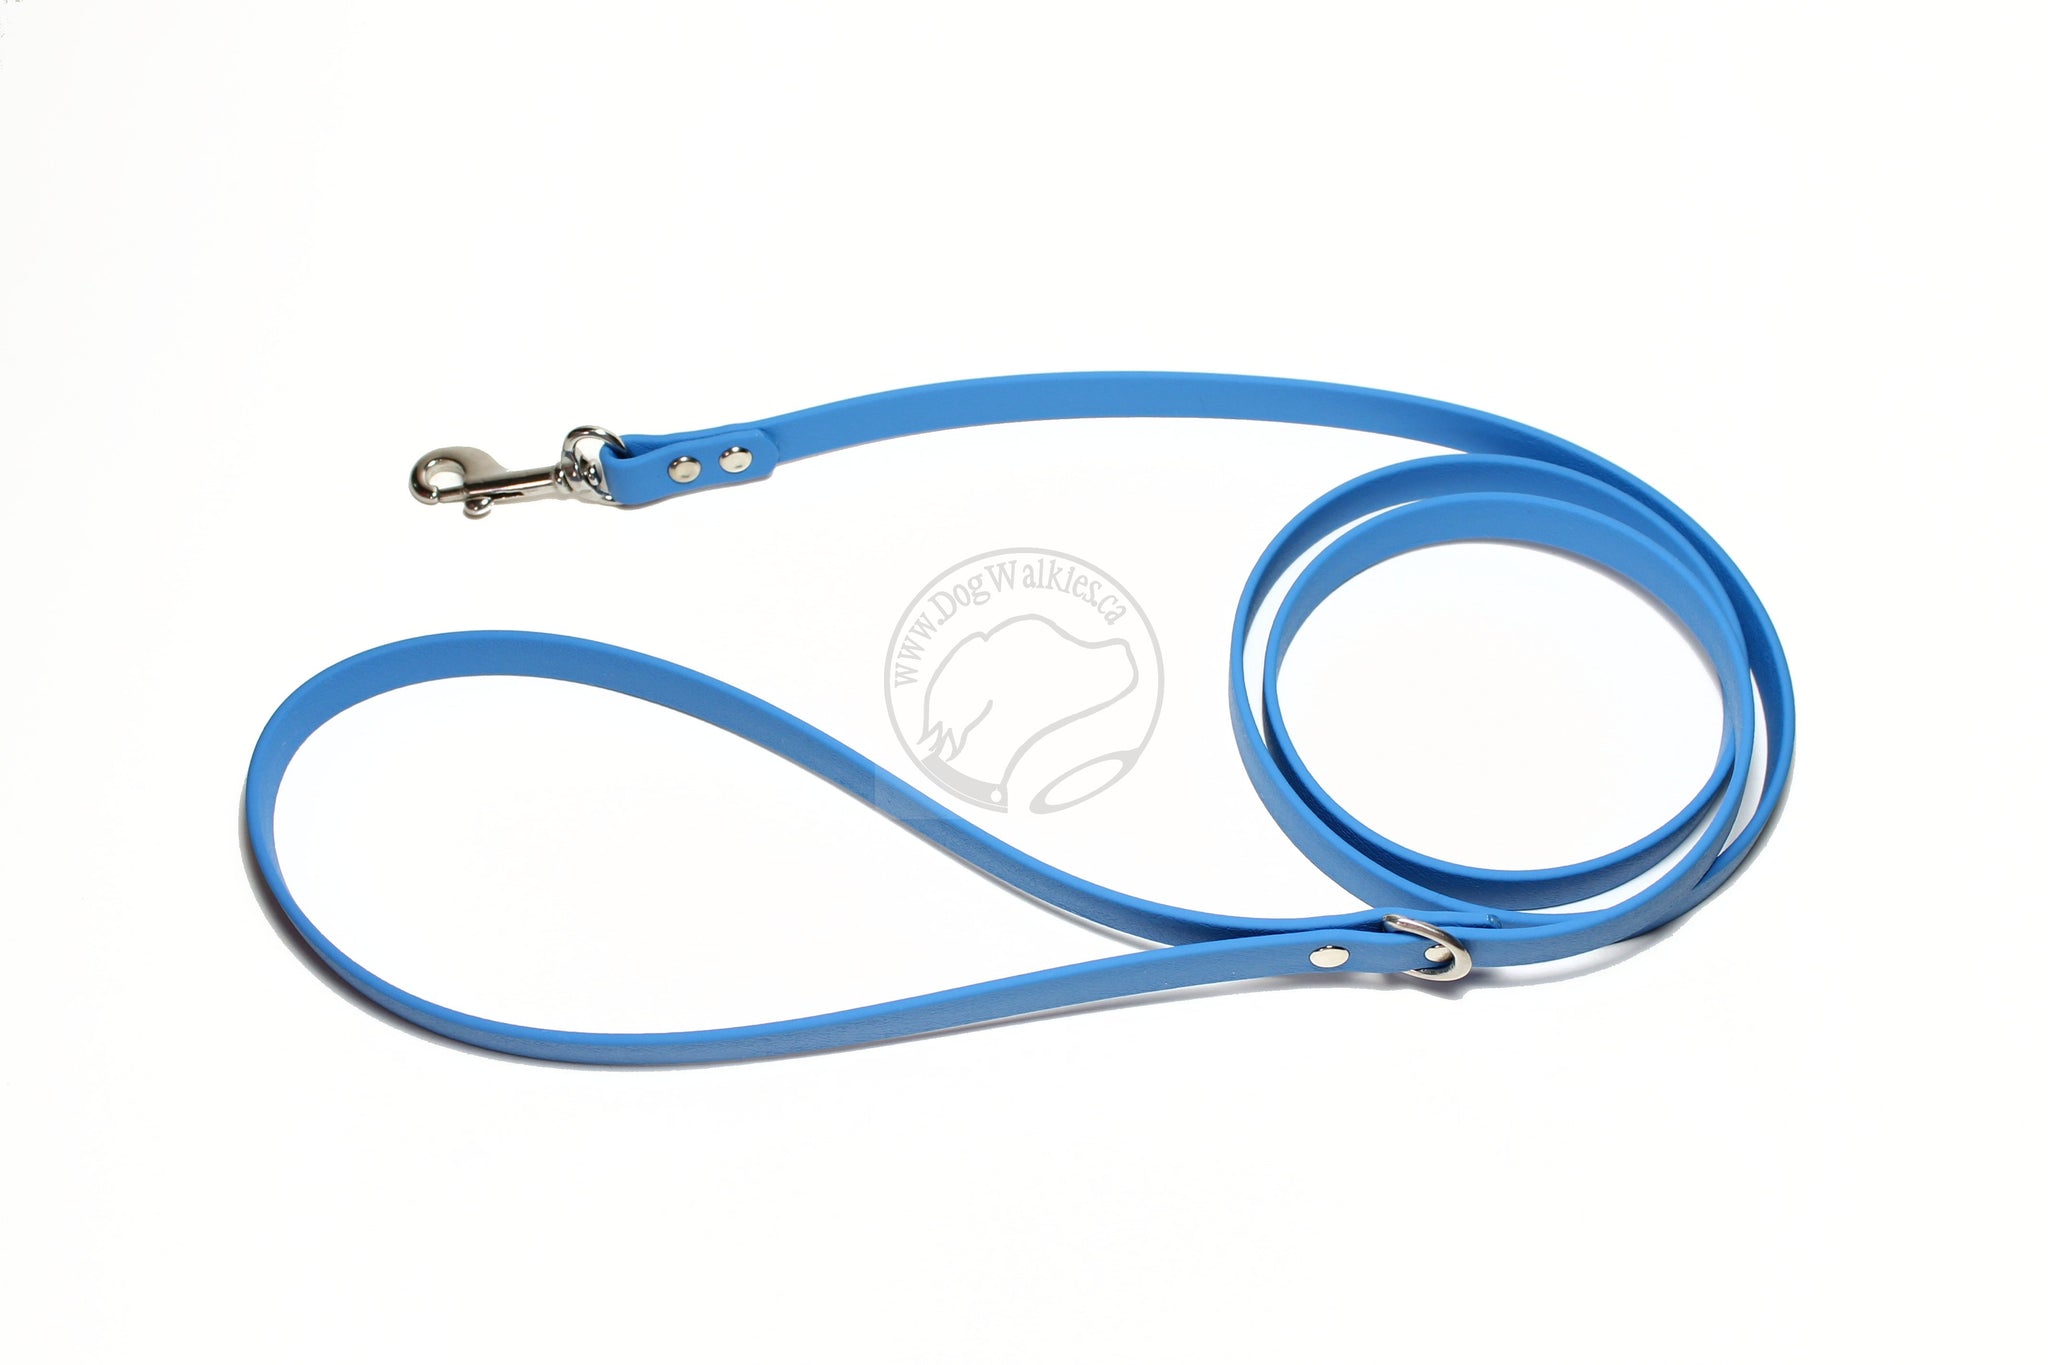 Caribbean Blue Biothane Small Dog Leash